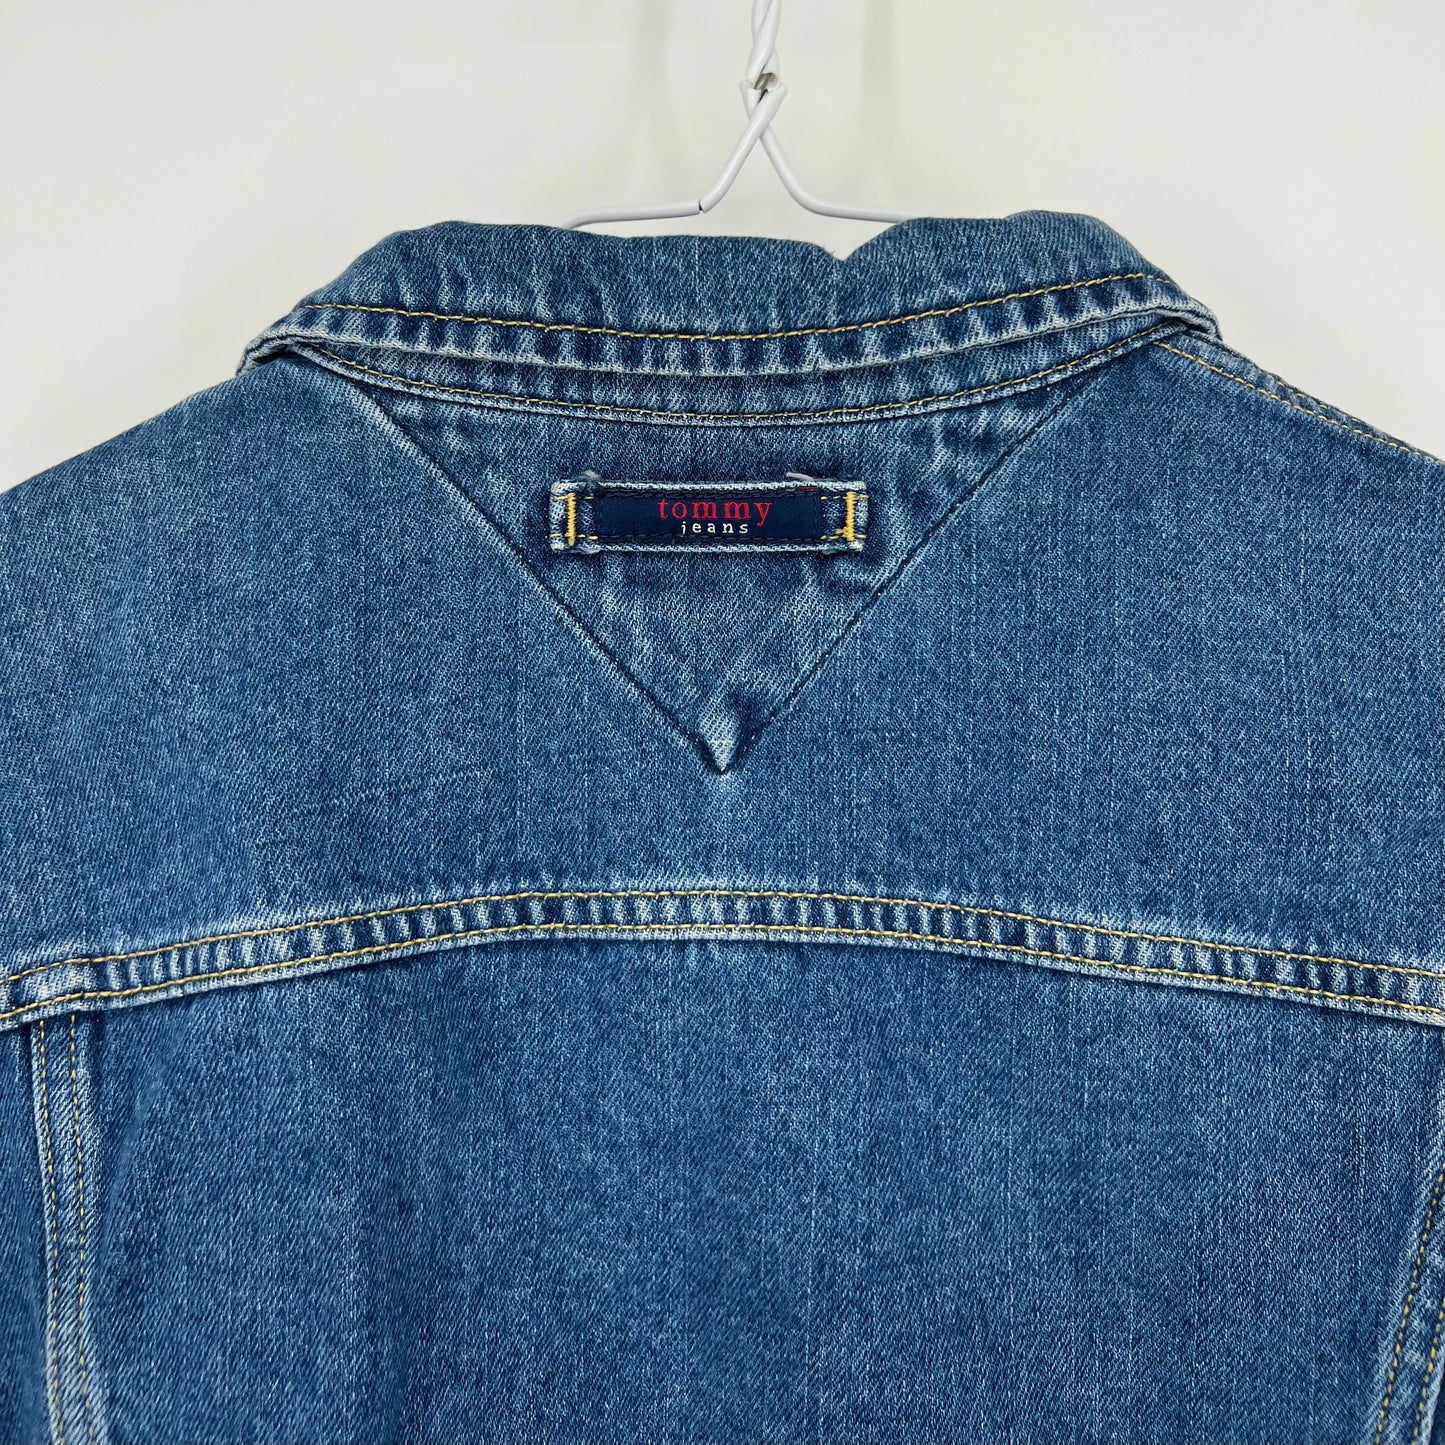 Vintage 90s Tommy Jeans Cropped Denim Jacket Sz: XL